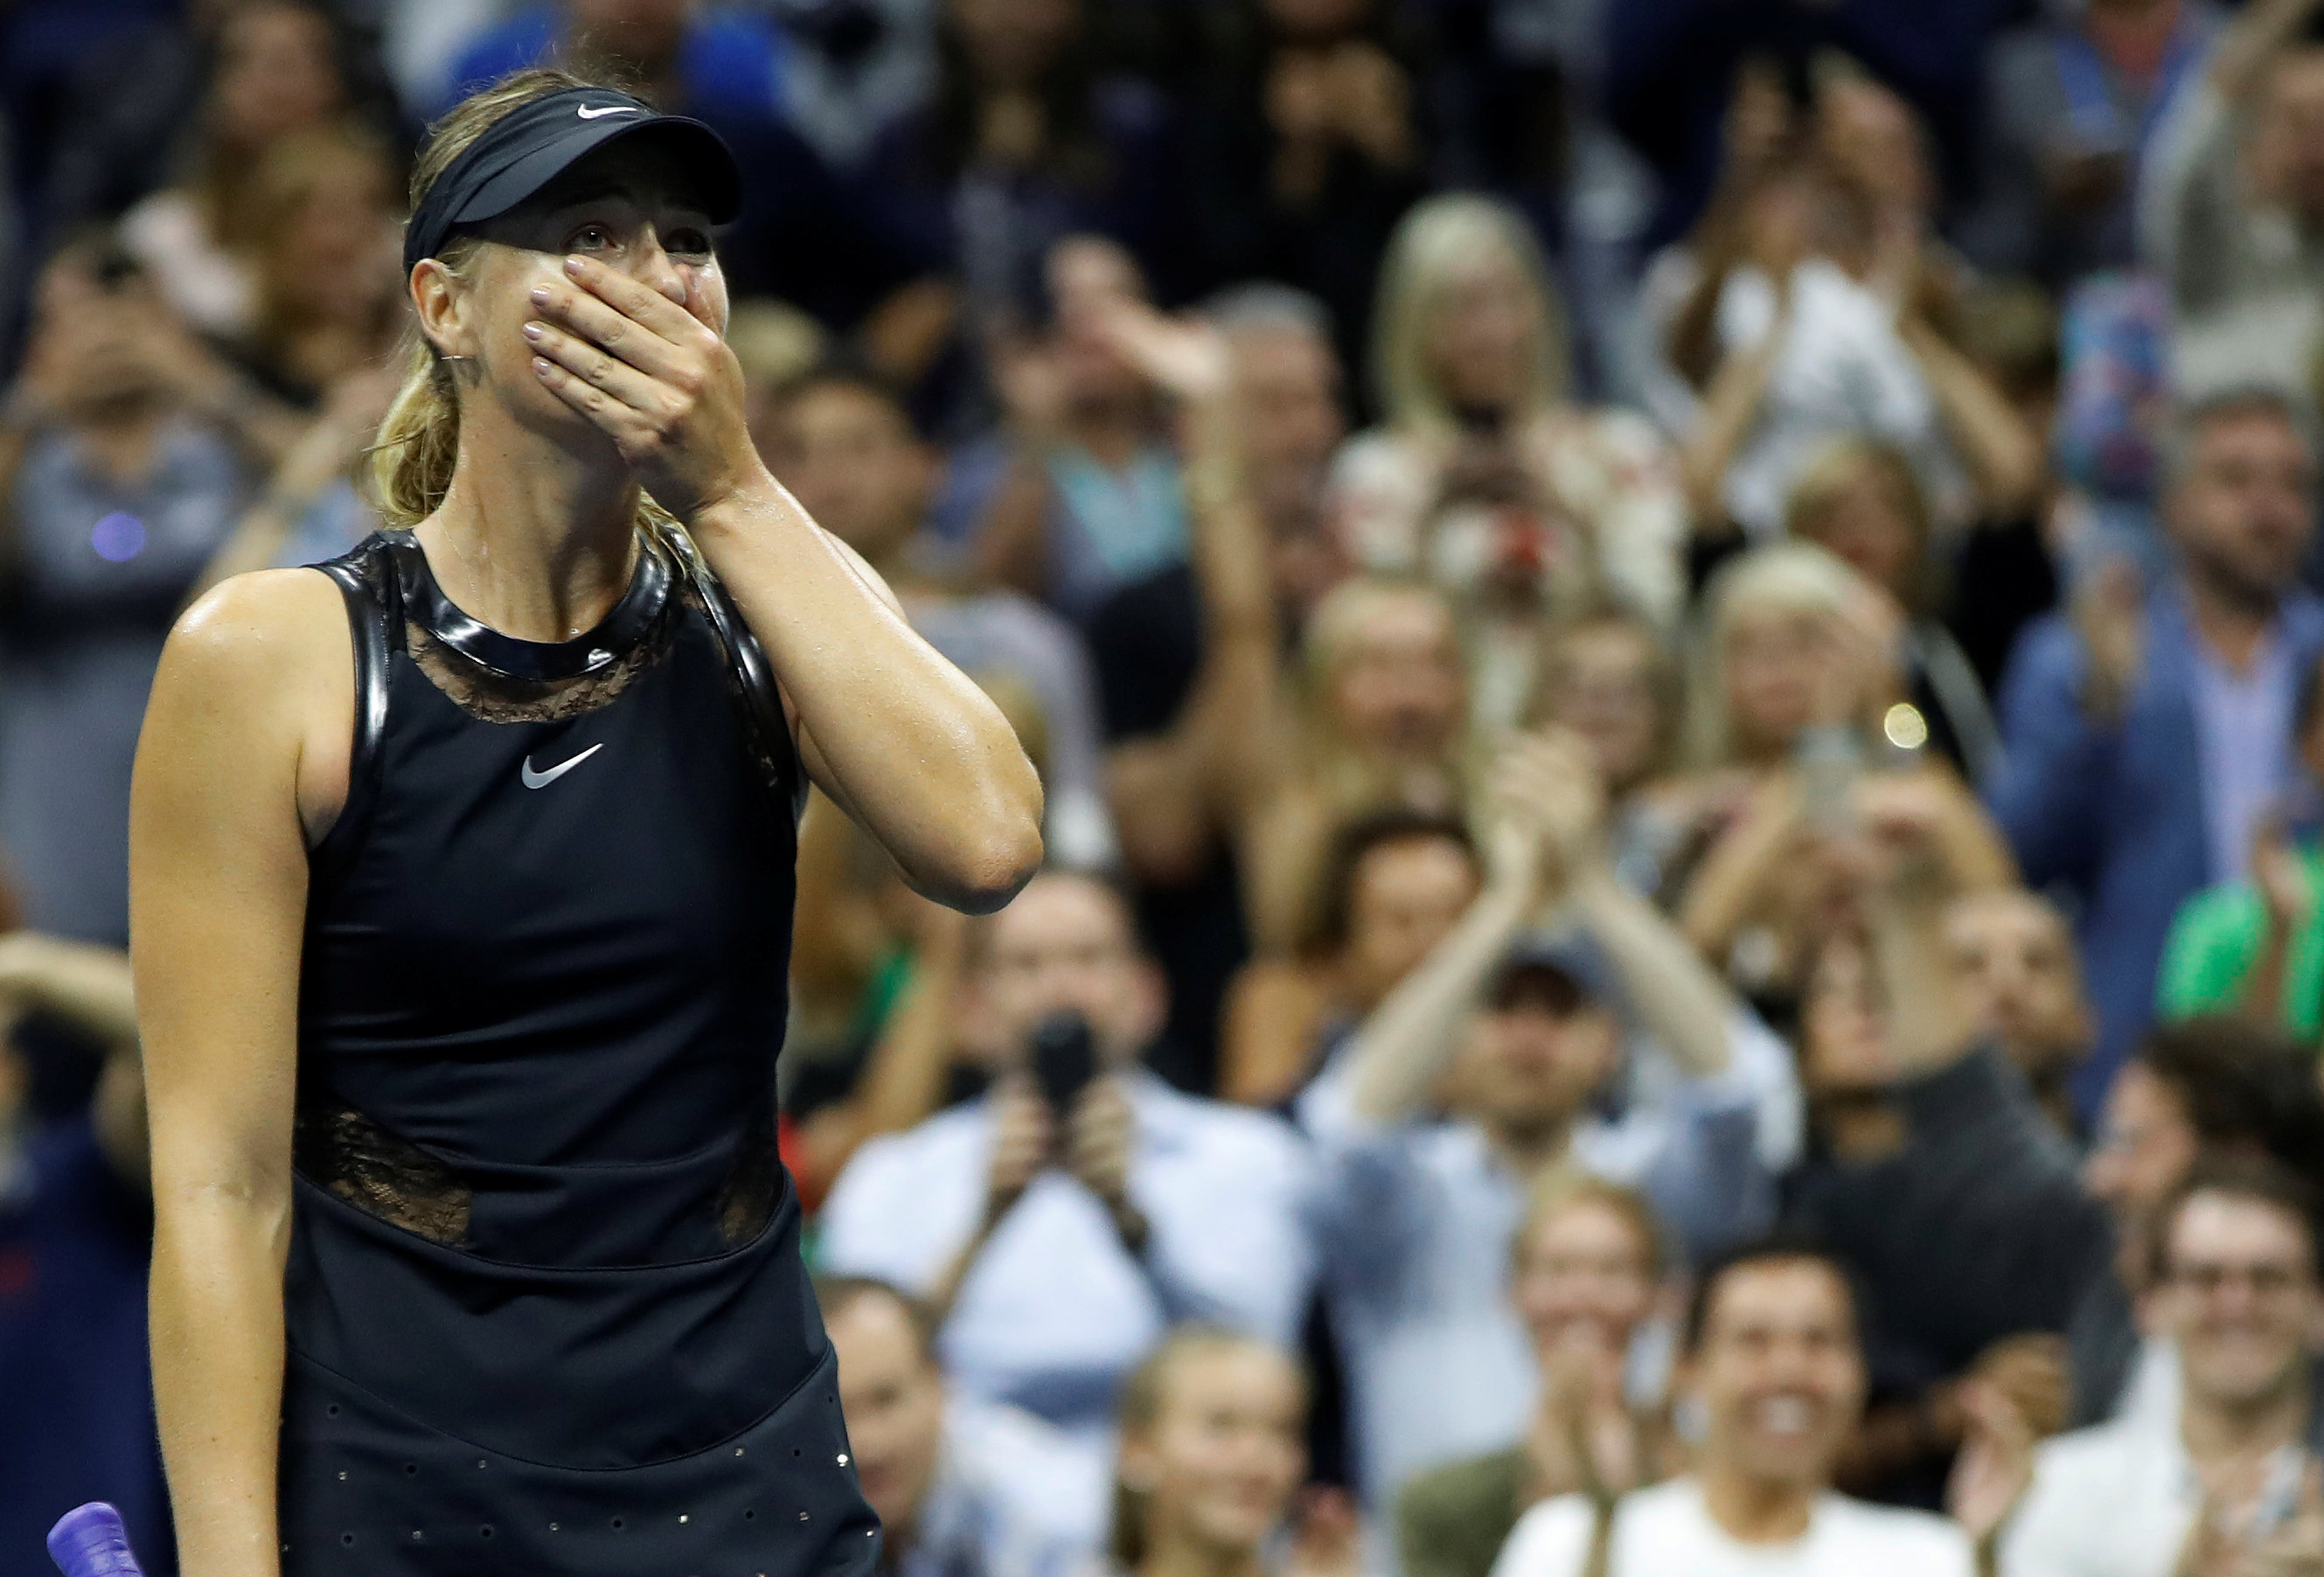 Tennis: Sharapova belies own doubts, back in New York spotlight